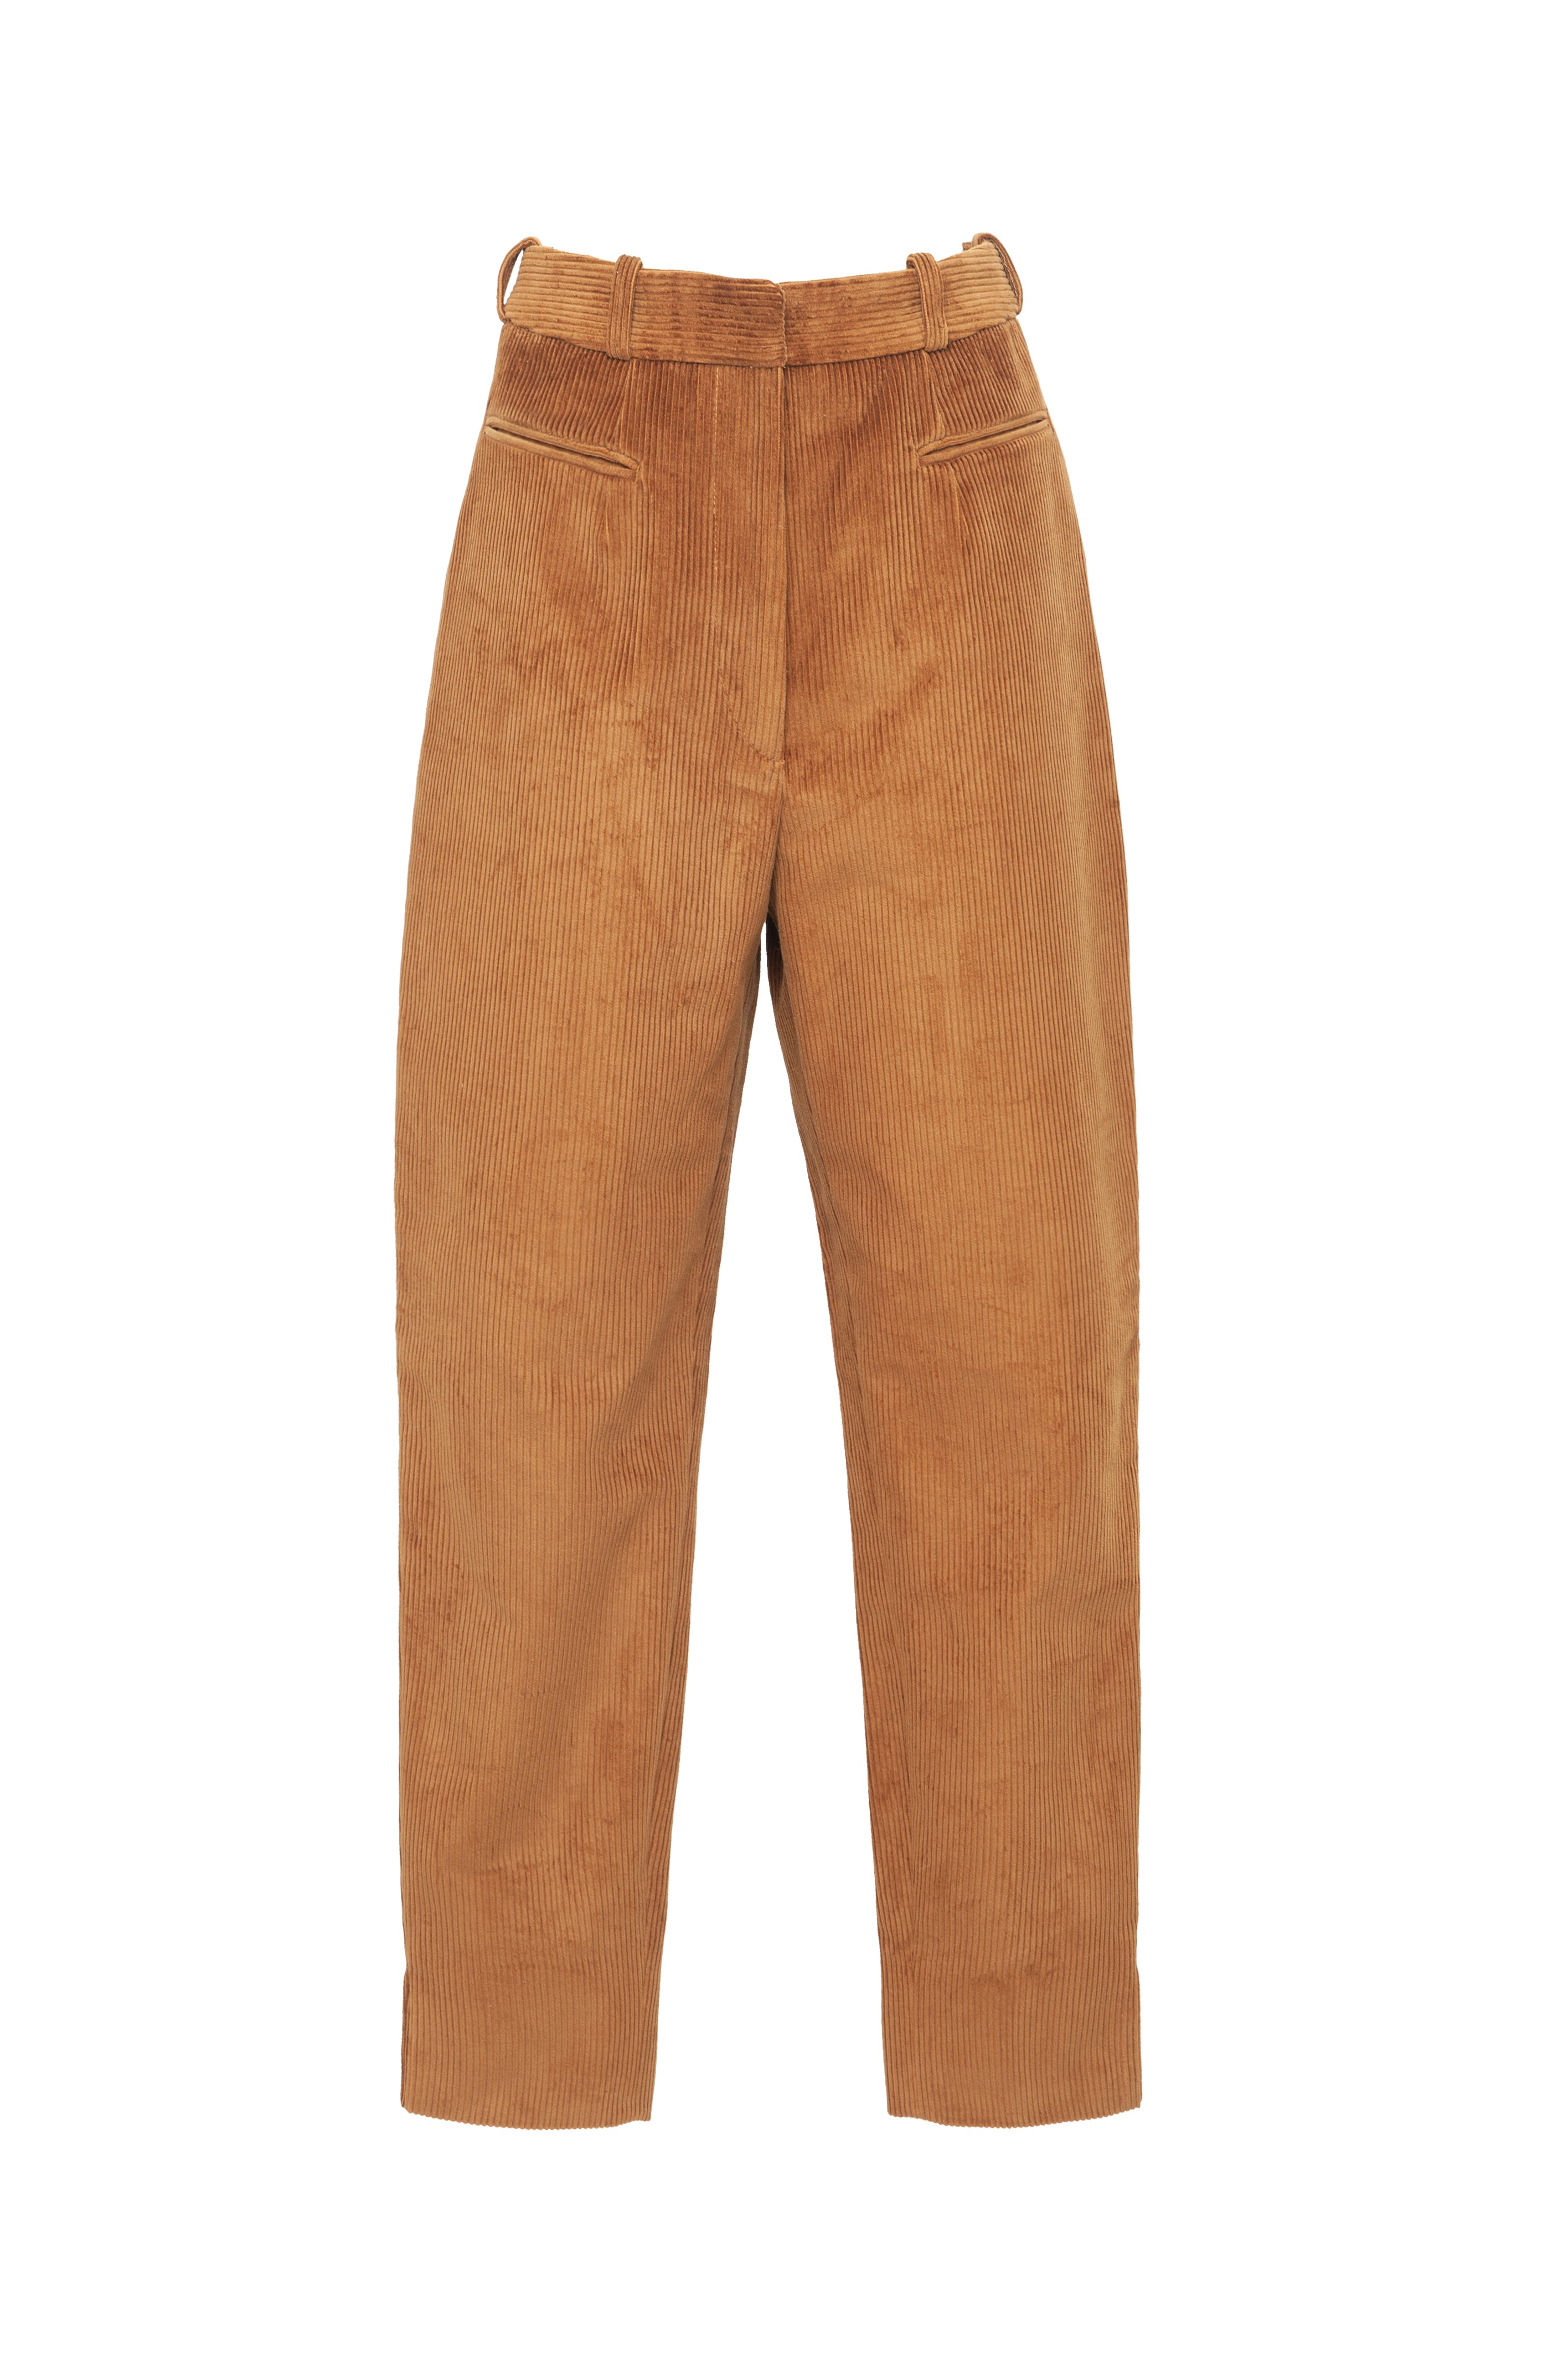 Orange Corduroy Pants for Men for sale  eBay